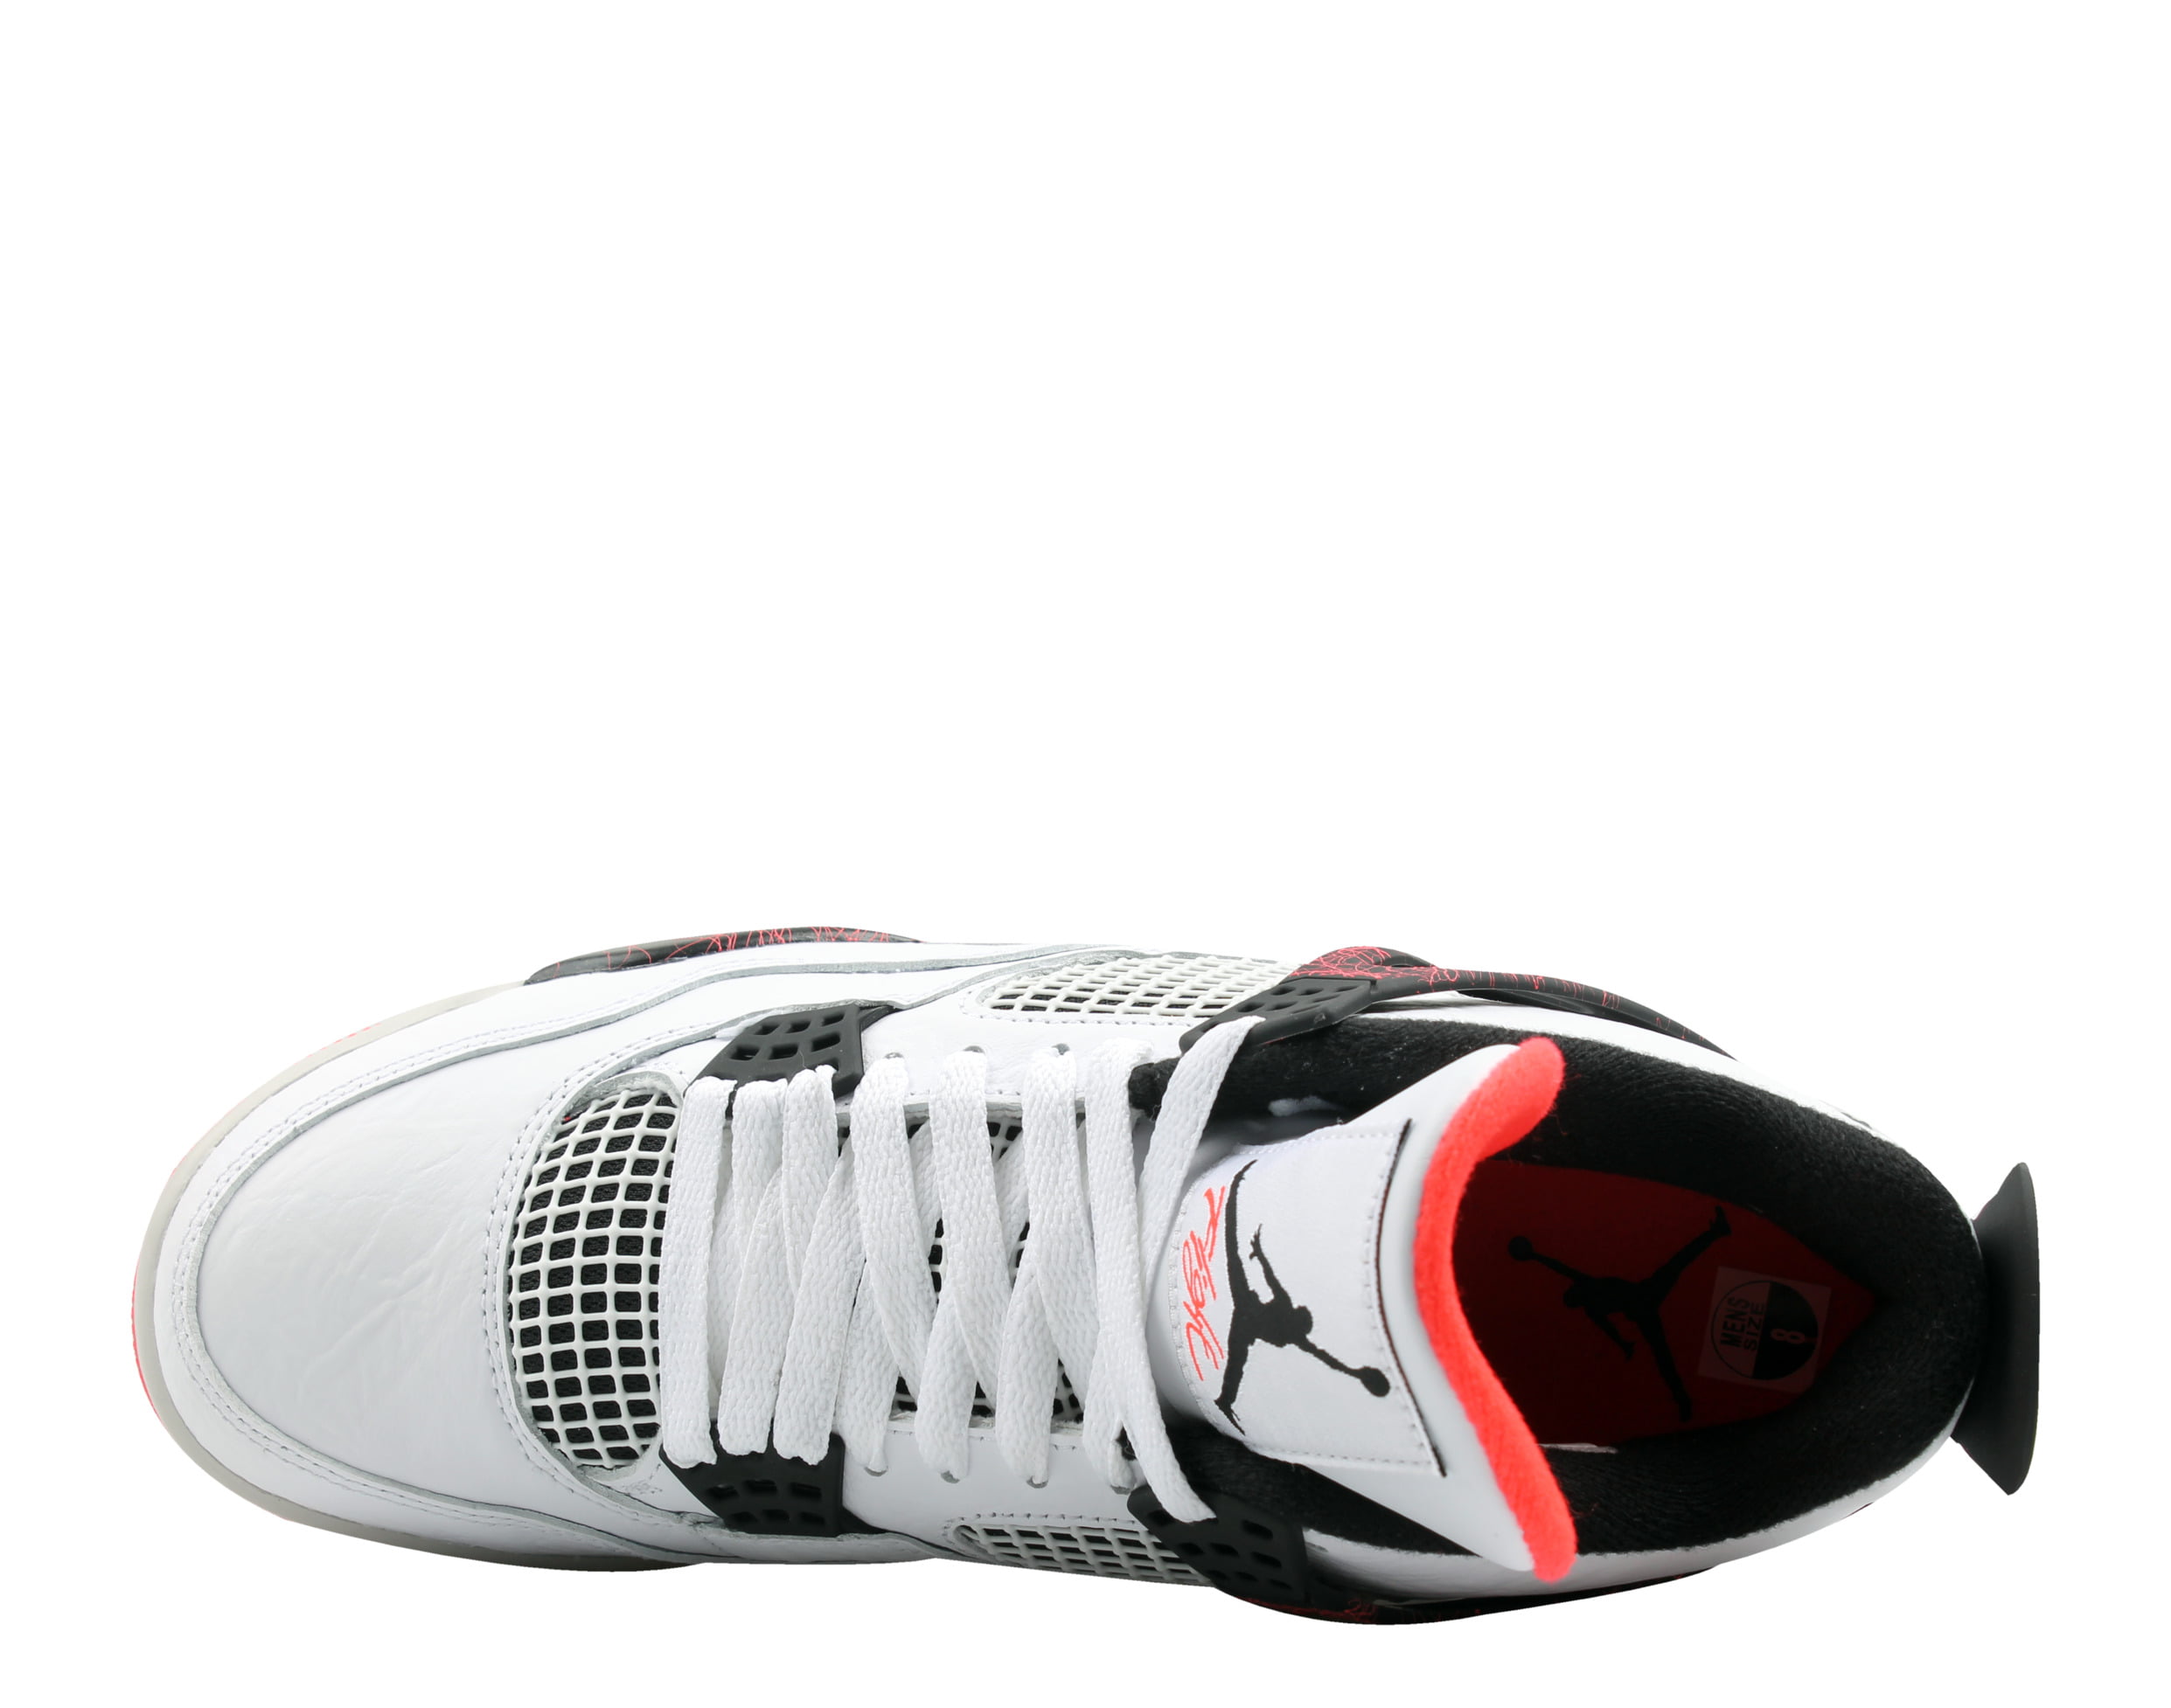 Nike Air Jordan 4 Retro “Hot Lava” Sneakers - White/Bright Crimson/Pale Citron/Black - 12